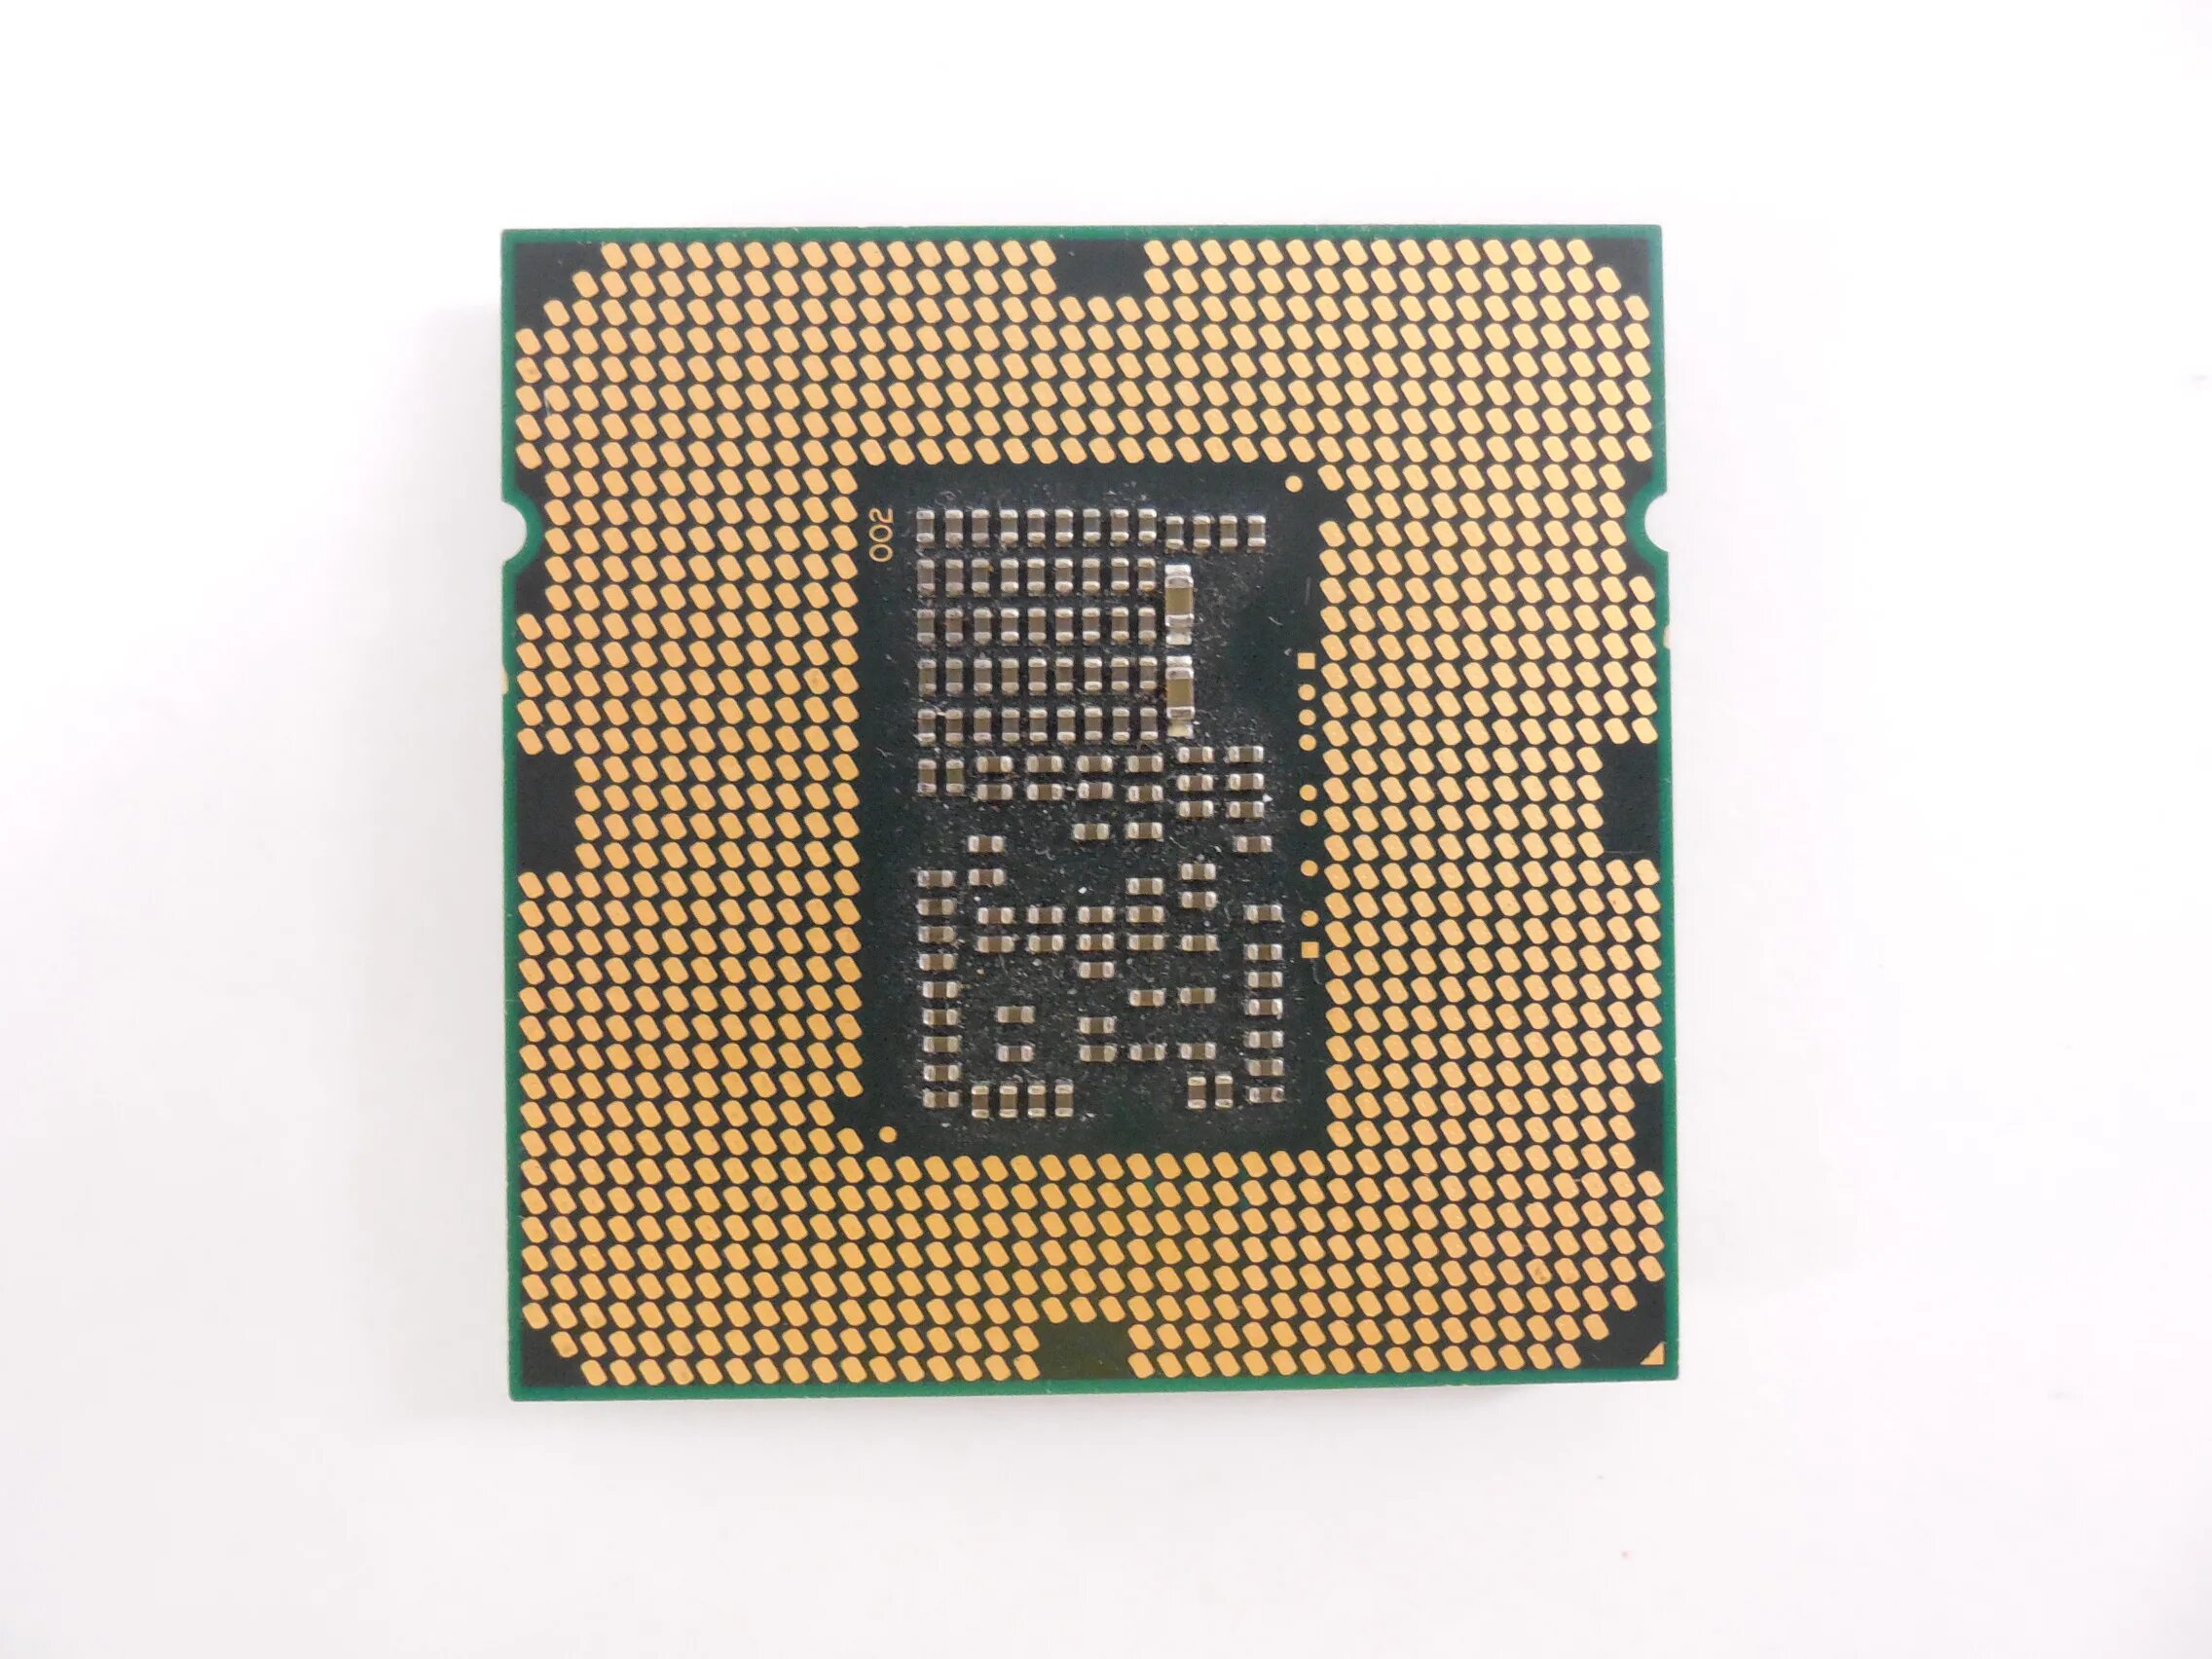 Модель процессора core i5. Intel Core i5-650 Clarkdale lga1156, 2 x 3200 МГЦ. Процессор Intel Core i5 650. Процессор сокет 1156 Intel Core i5-650. Процессор сокет 1150 i7 4790.